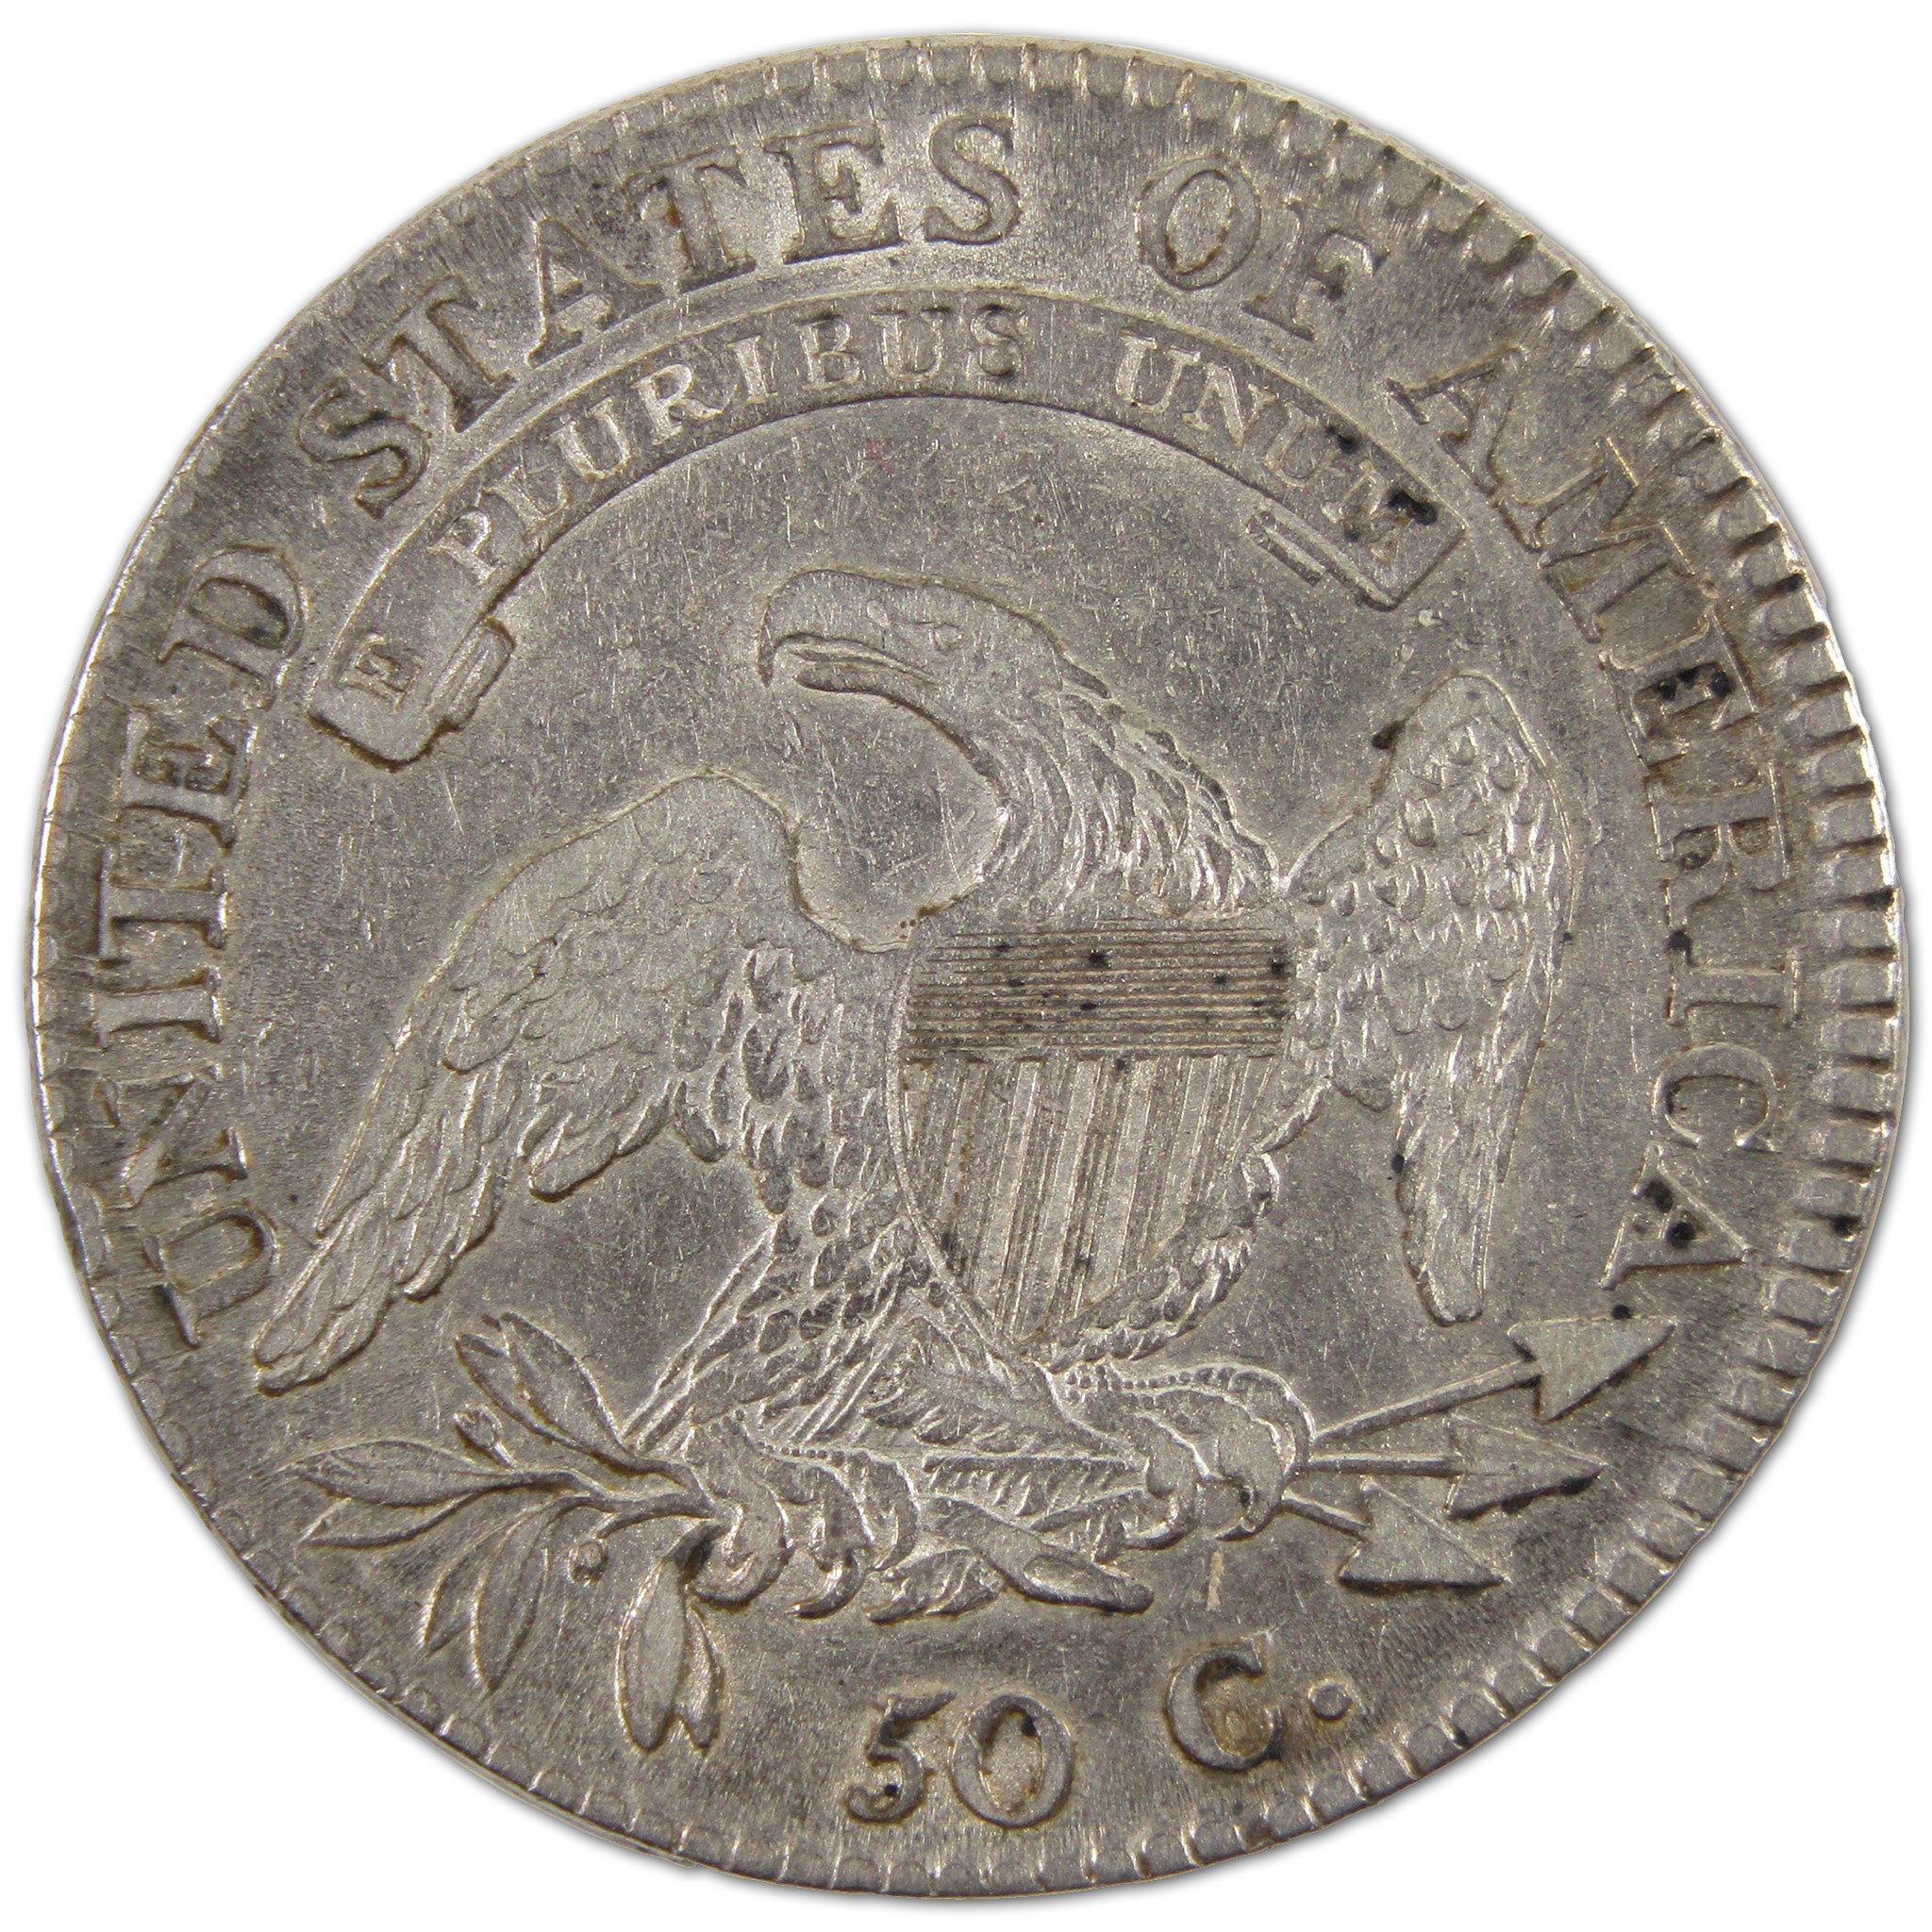 1818/7 Large 8 Capped Bust Half Dollar XF Details Silver SKU:I10921